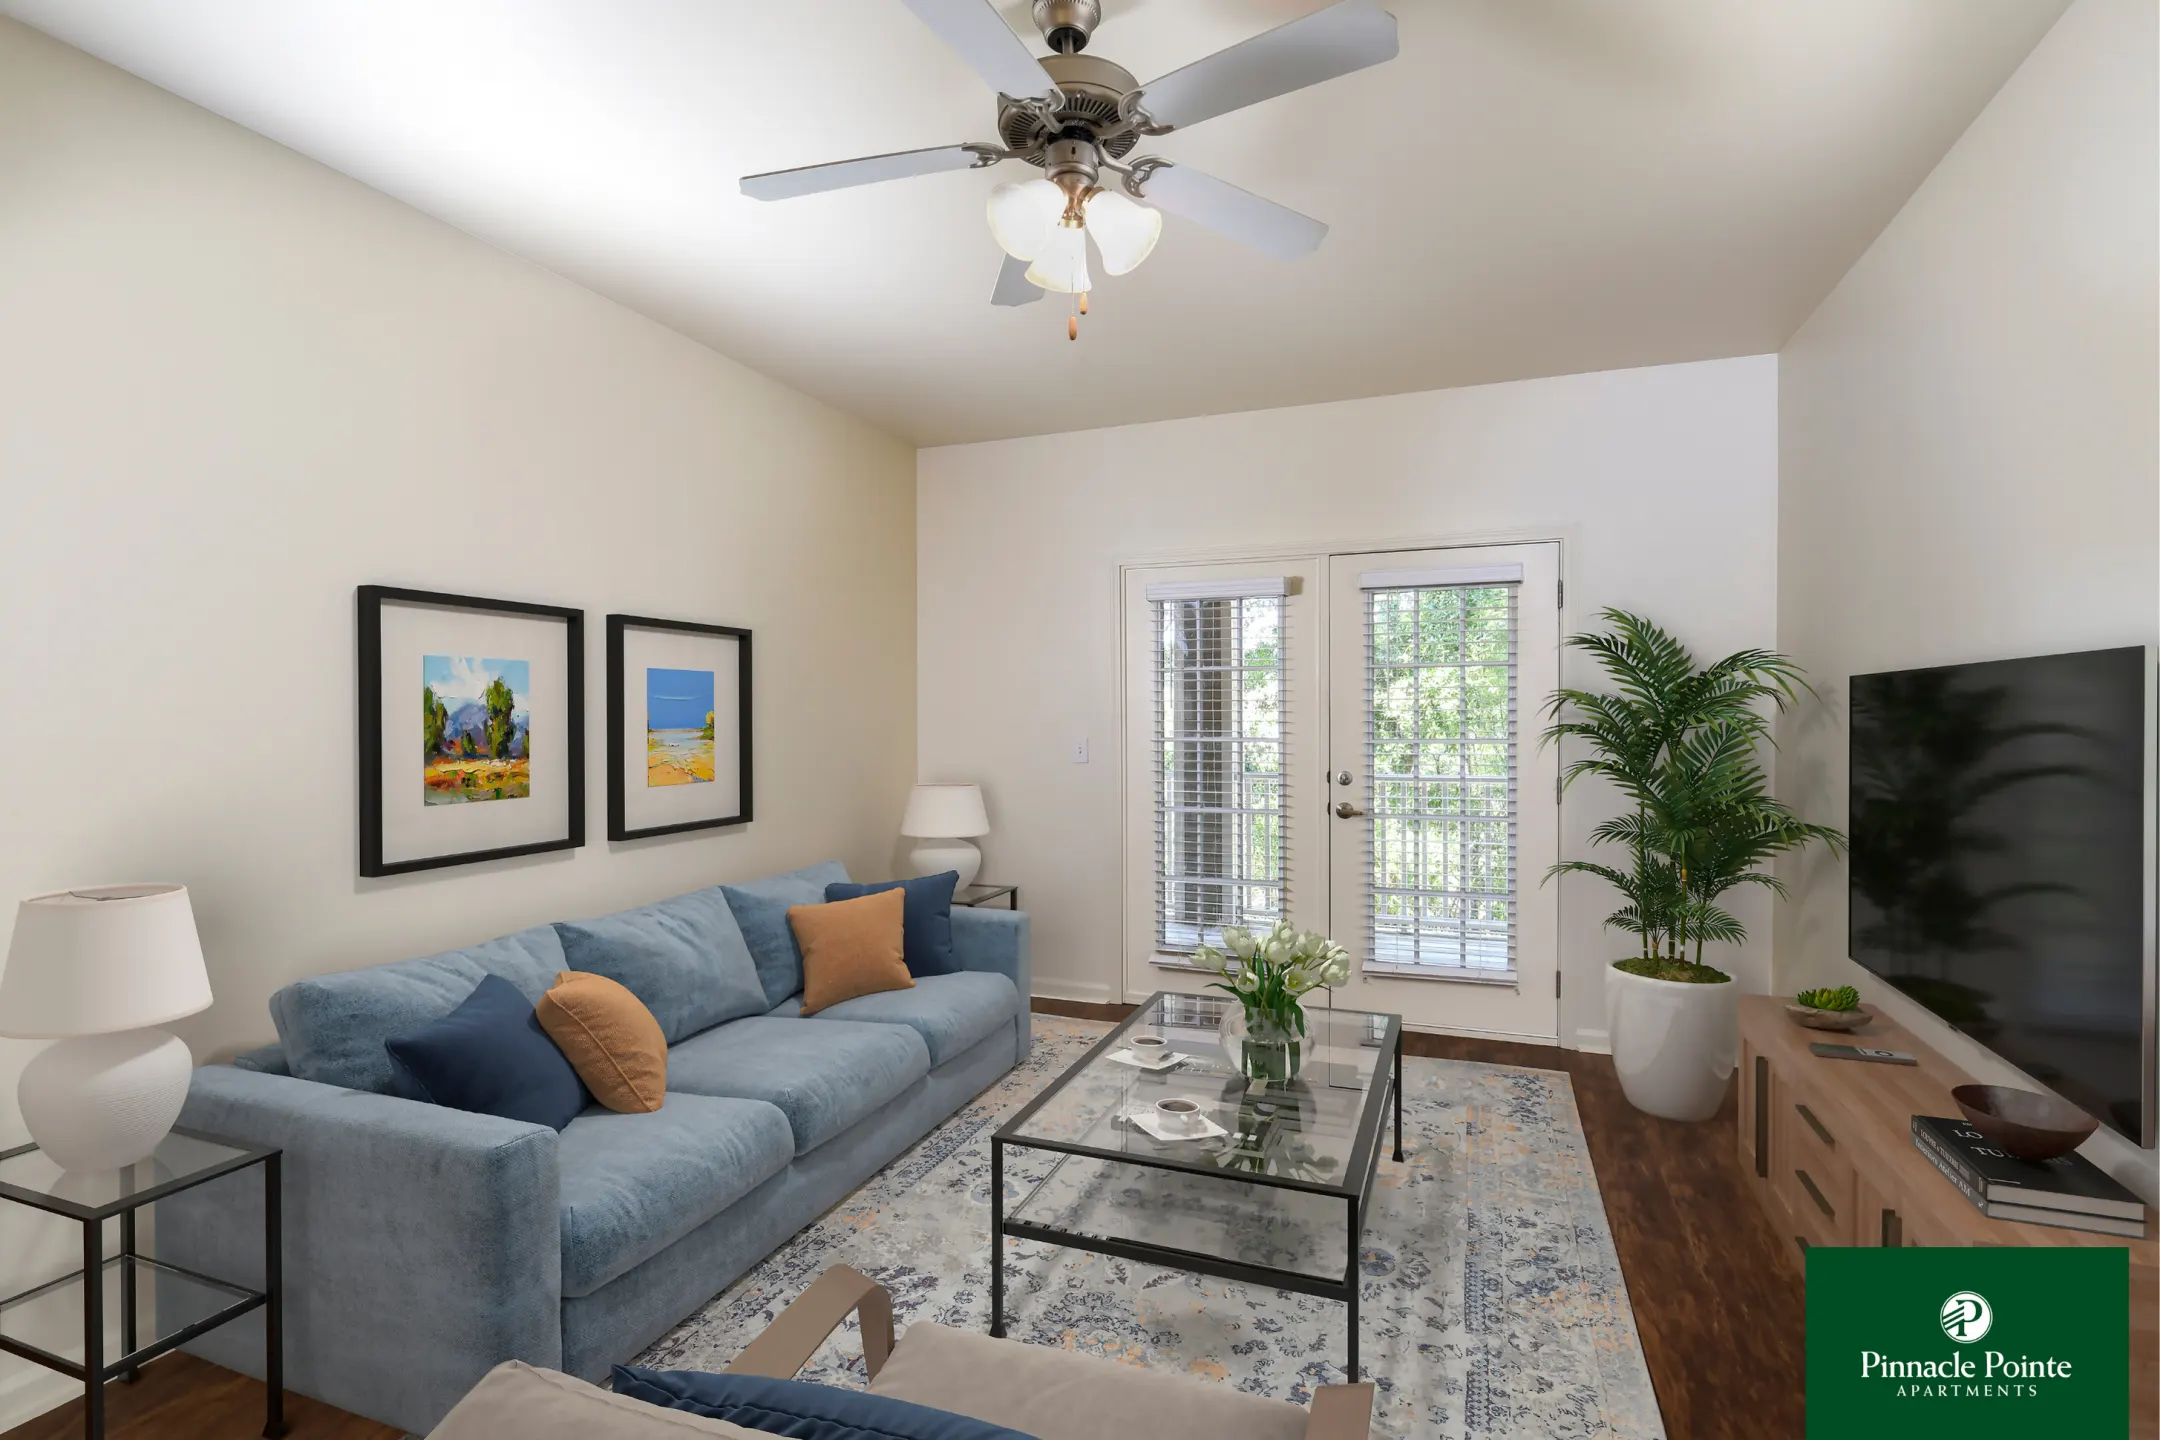 Living Room - Pinnacle Pointe Apartments - Crestview, FL